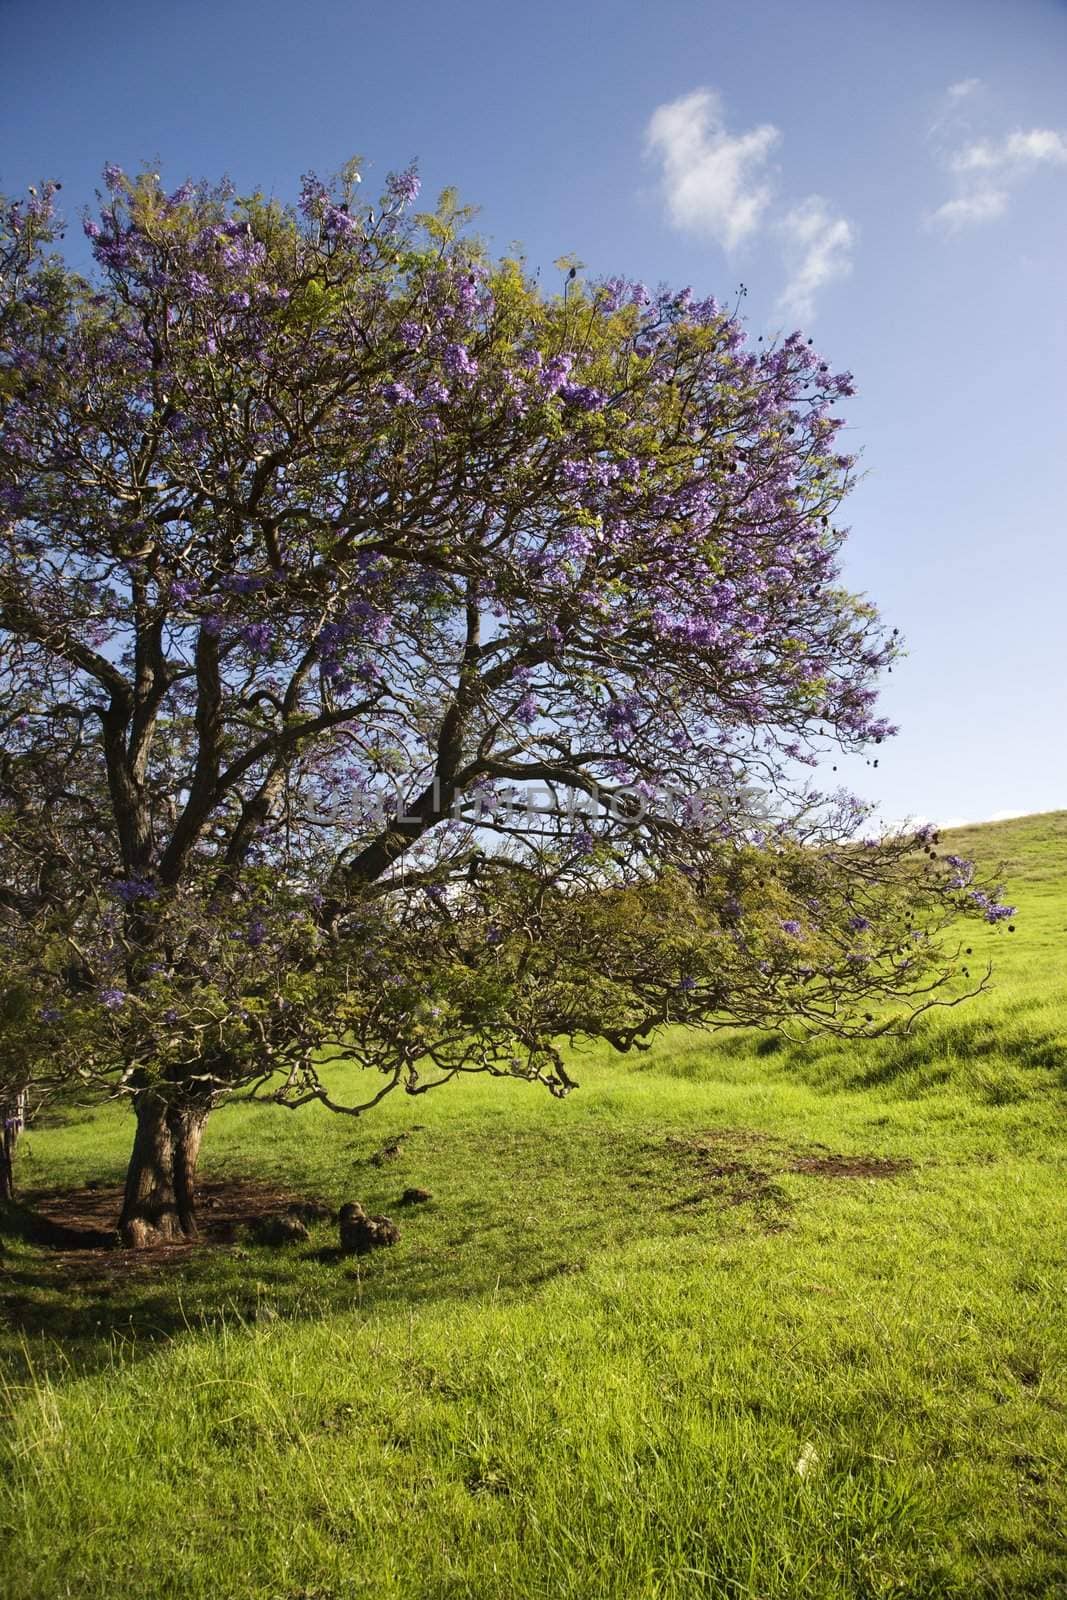 Jacaranda Tree blooming with purple flowers in field of green grass in Maui, Hawaii.